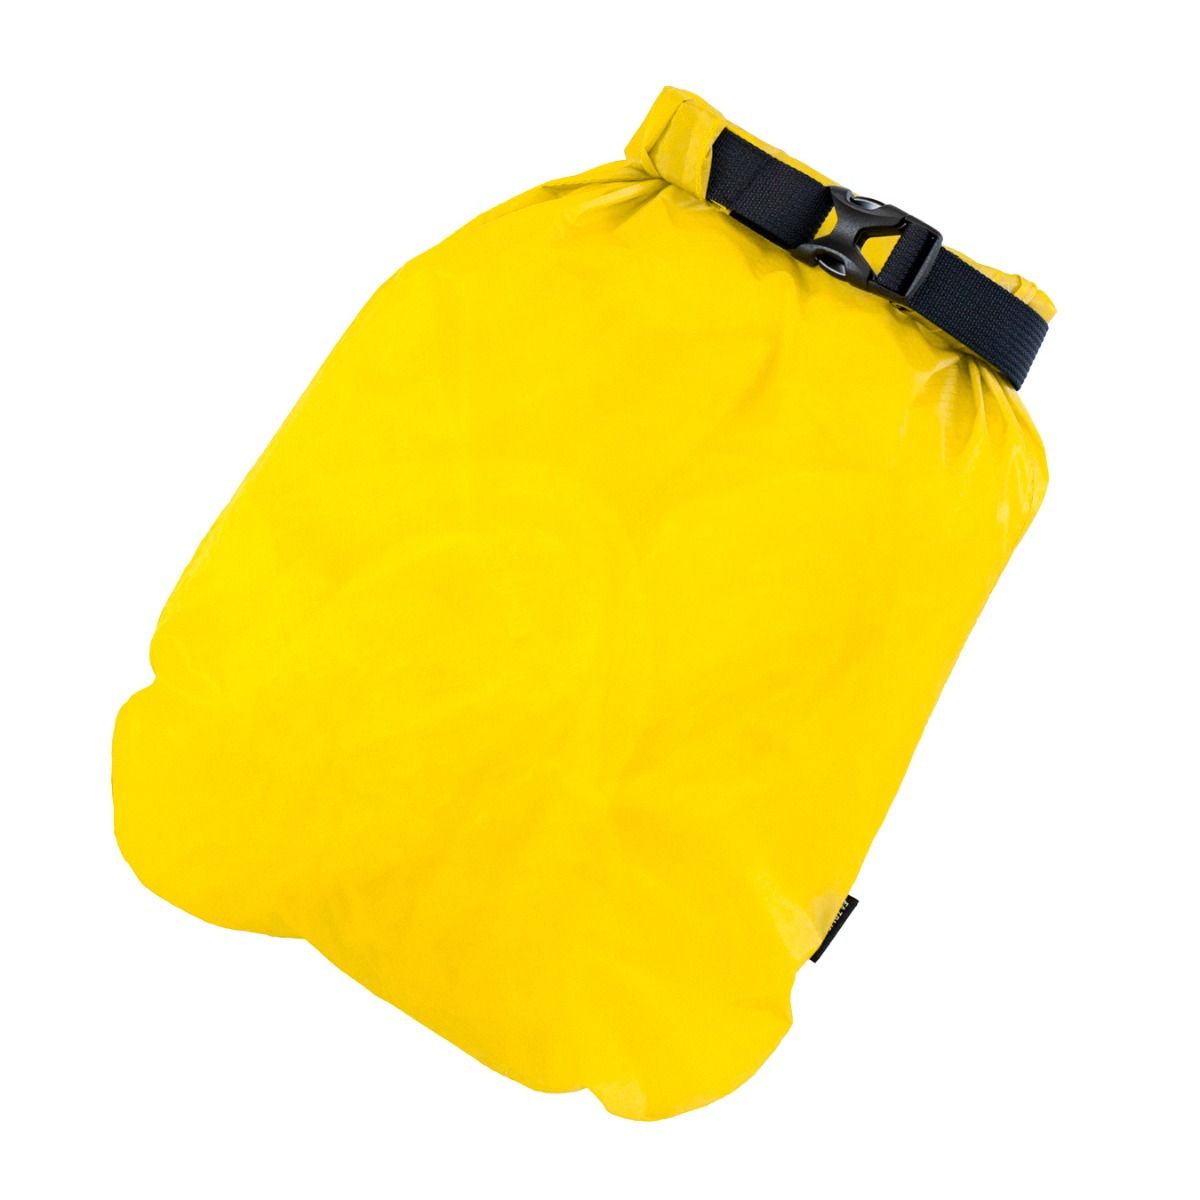 *FAIRWEATHER* dry sack (yellow)